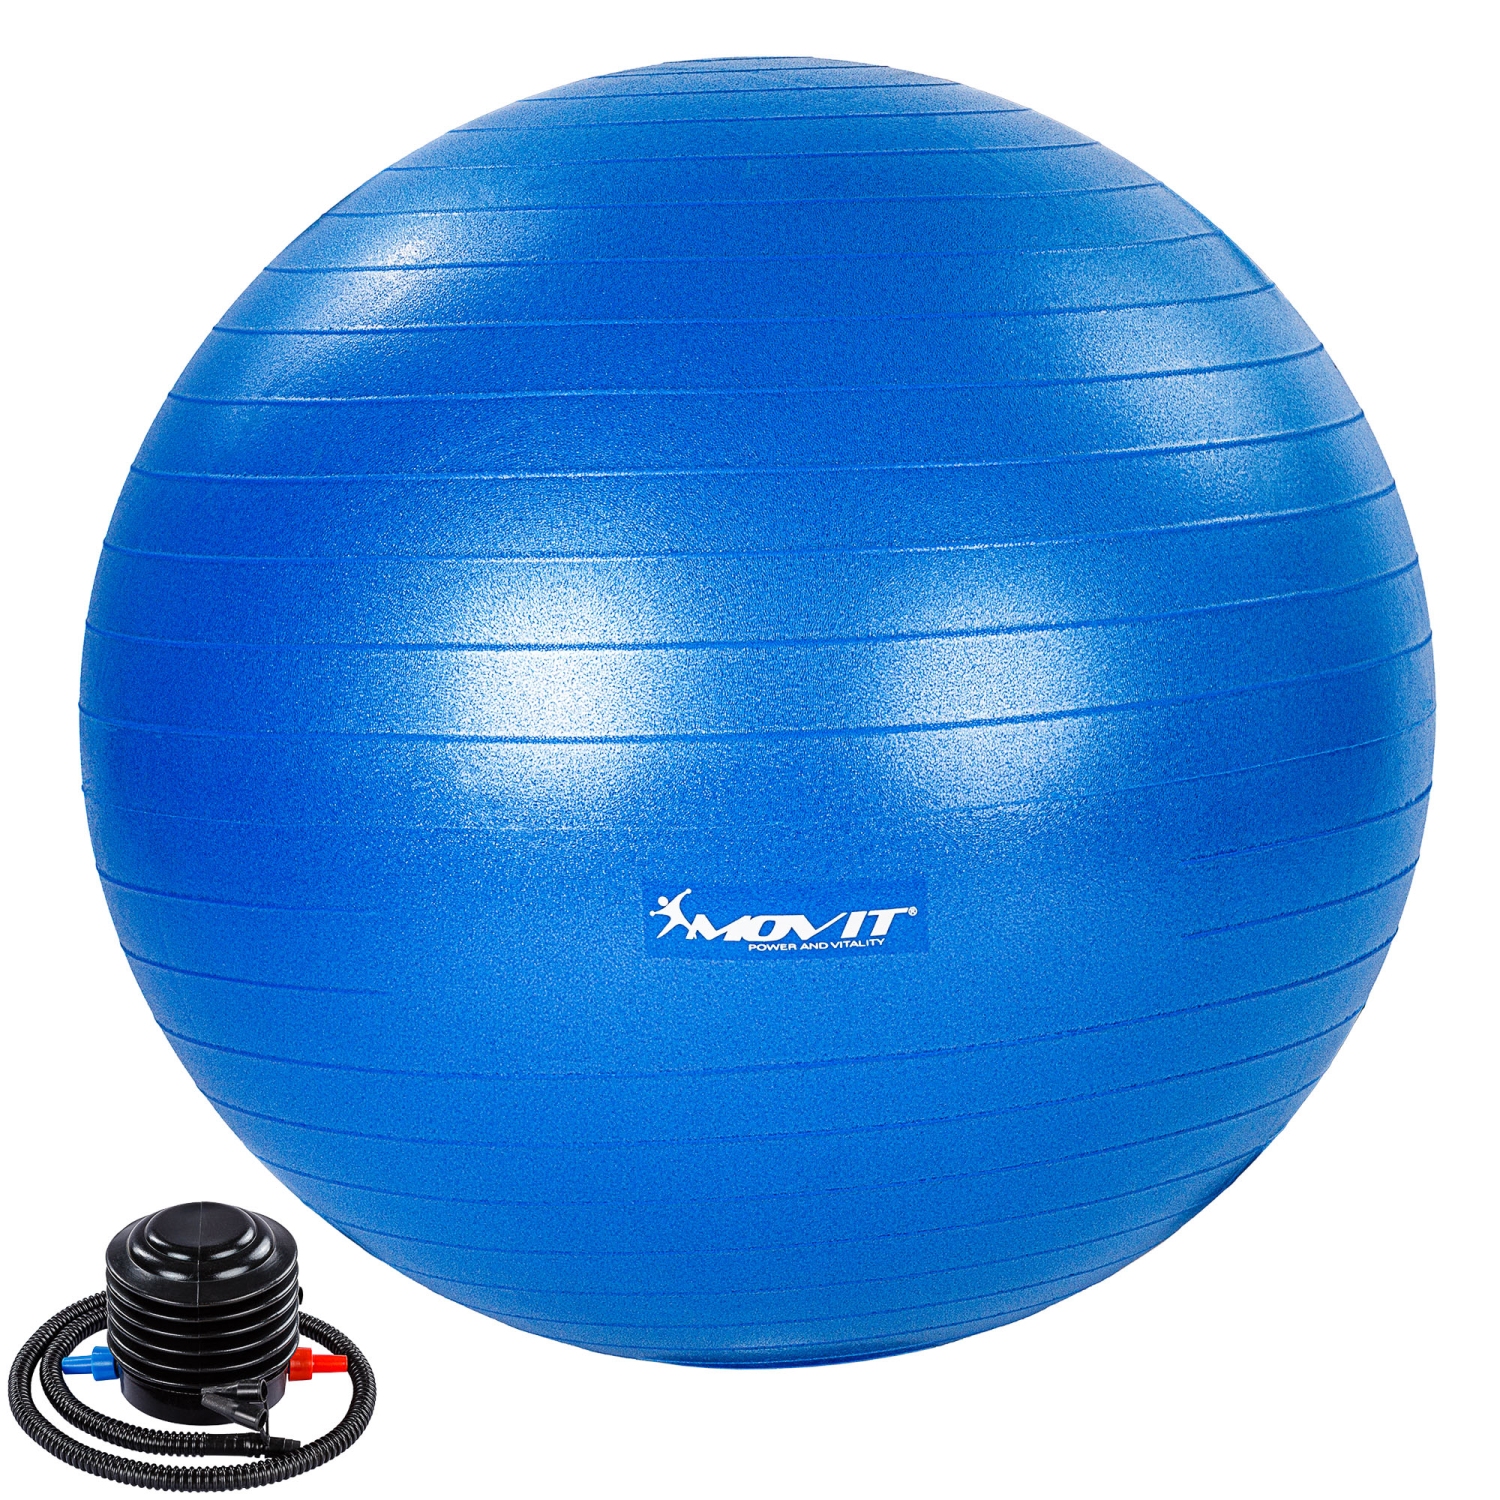 Yoga bal – Pilates bal – Fitness bal – 65 cm – Inclusief pomp – Blauw